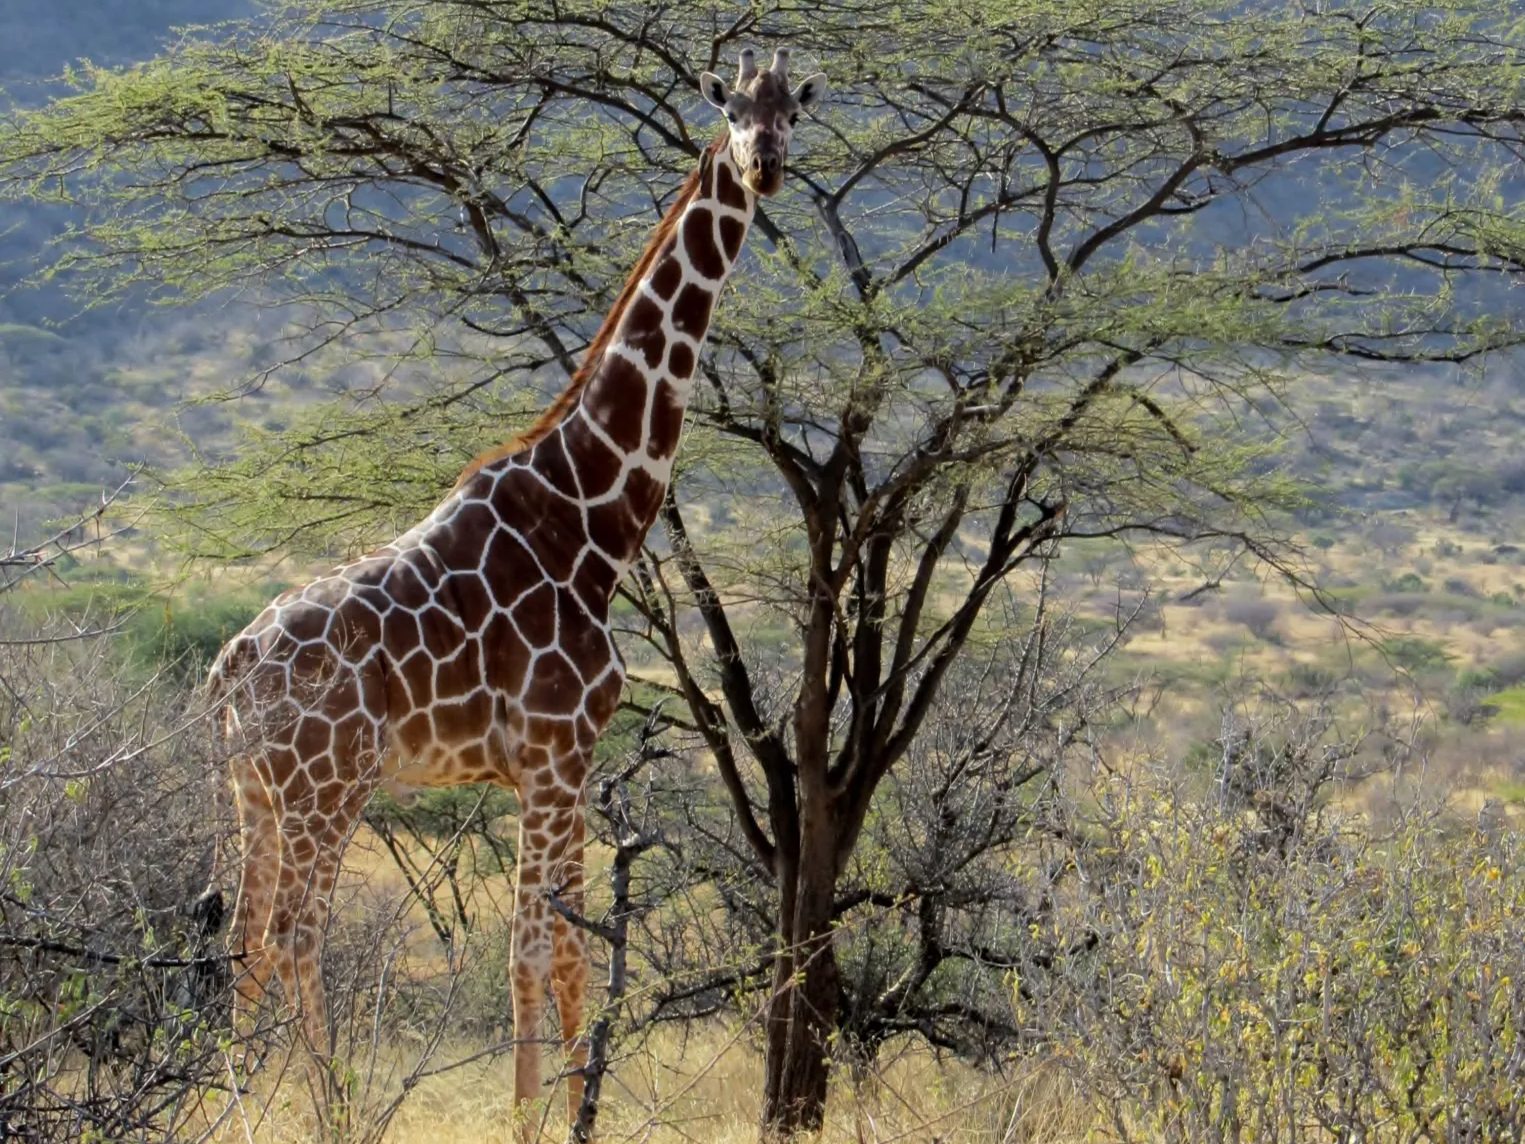 Kenya Safari, Reticulated giraffe, acacia tree